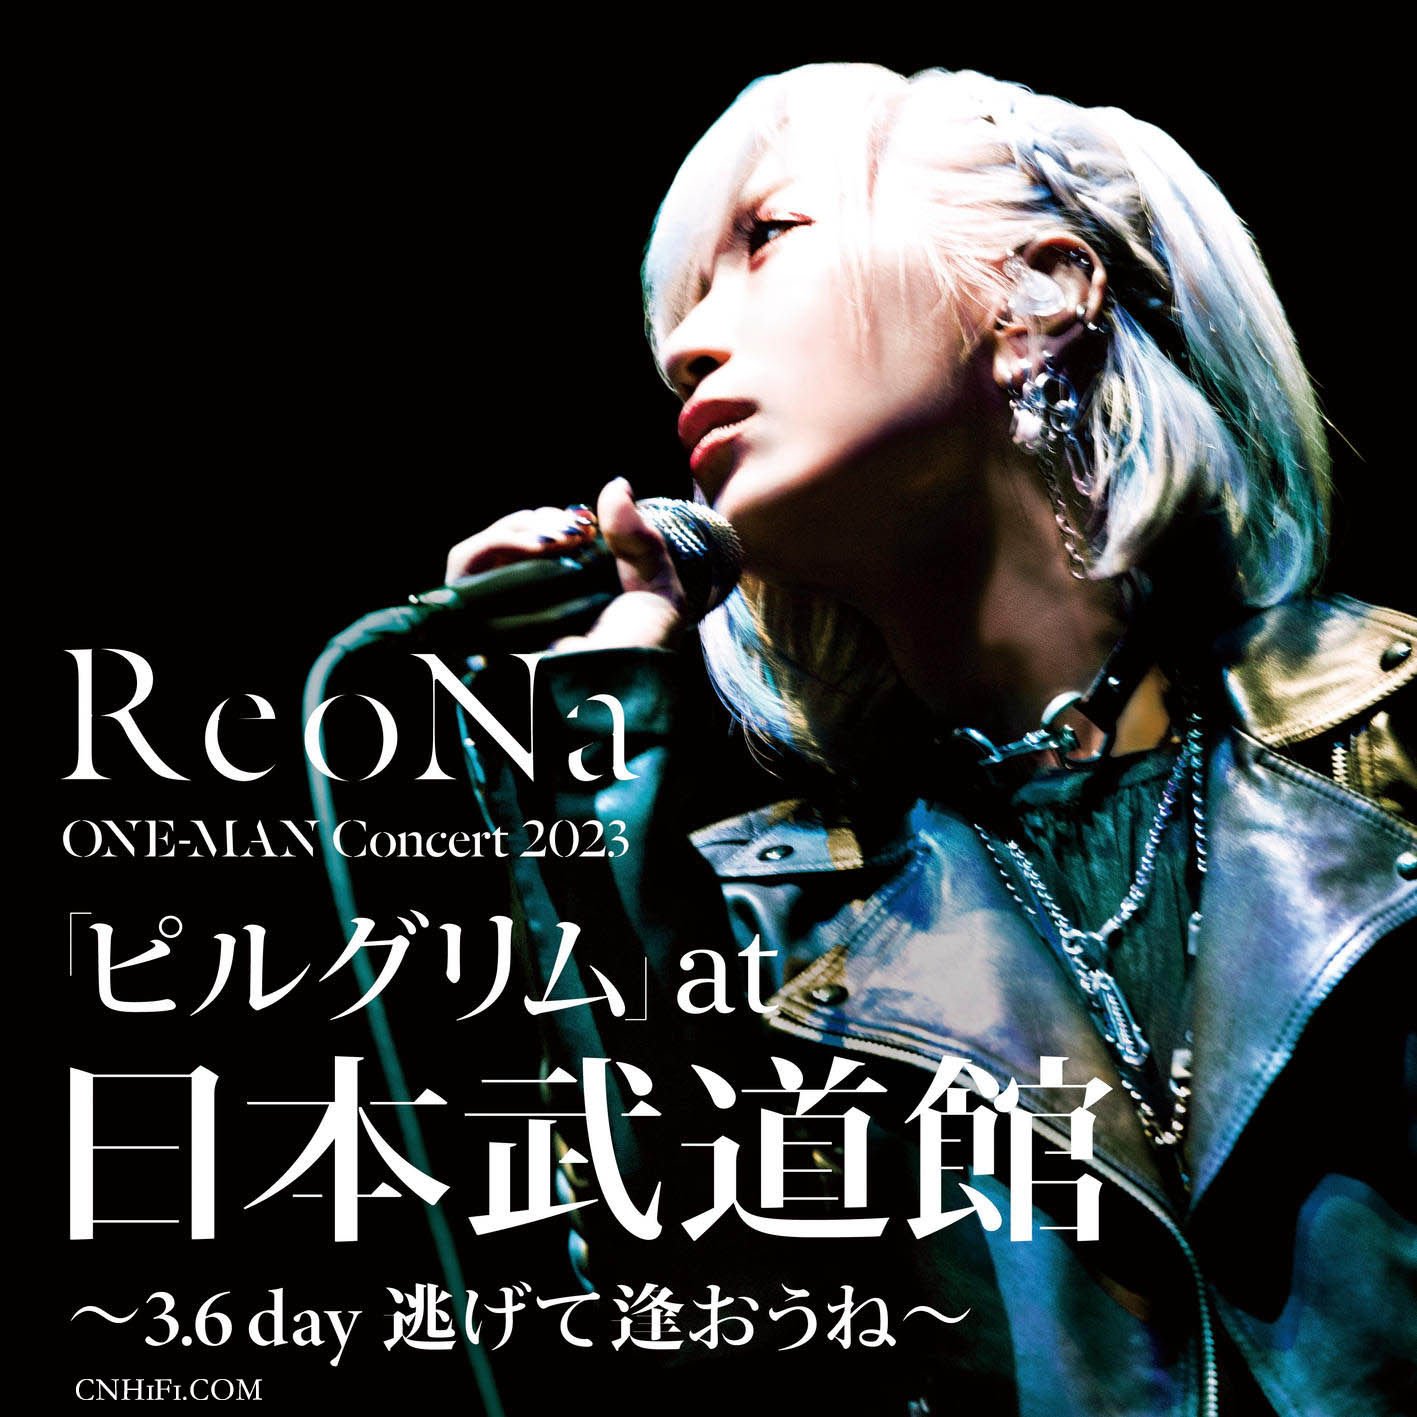 ReoNa ONE-MAN Concert 2023 Pilgrim 3.6 day Nigete aoune